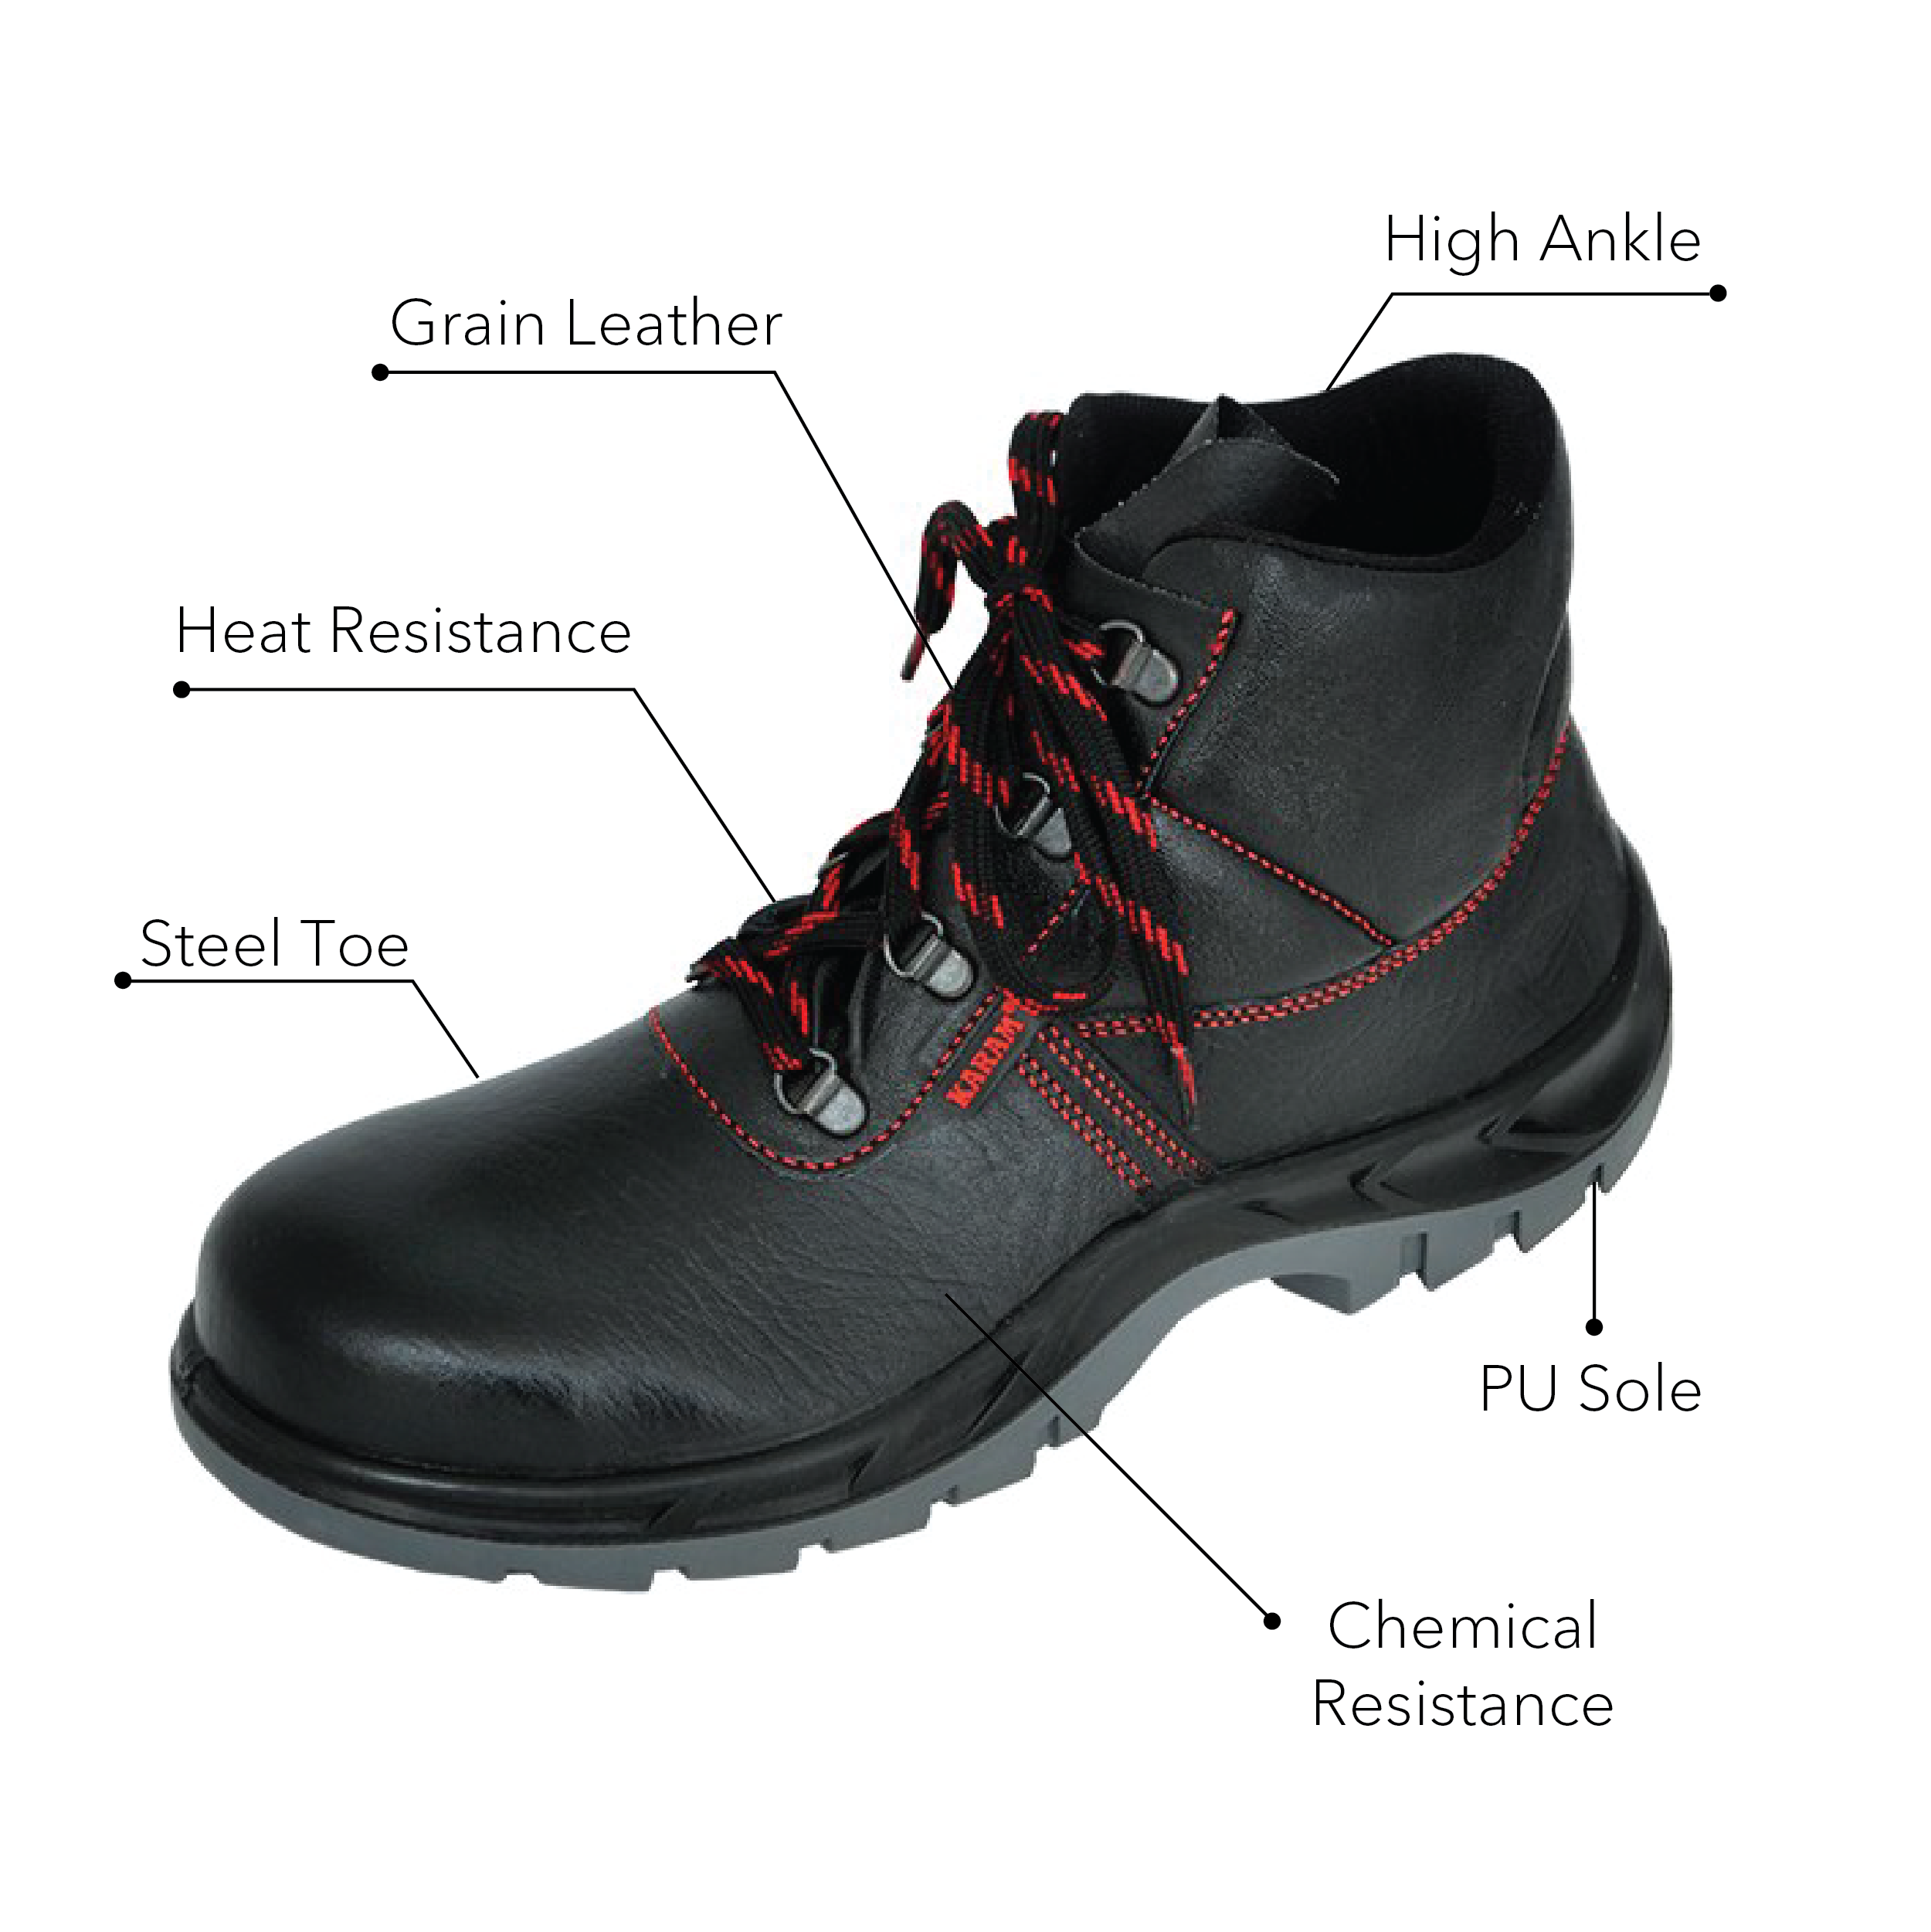 Buy Karam FS 21 - High Ankle, Double Density, Black Steel Toe Safety ...